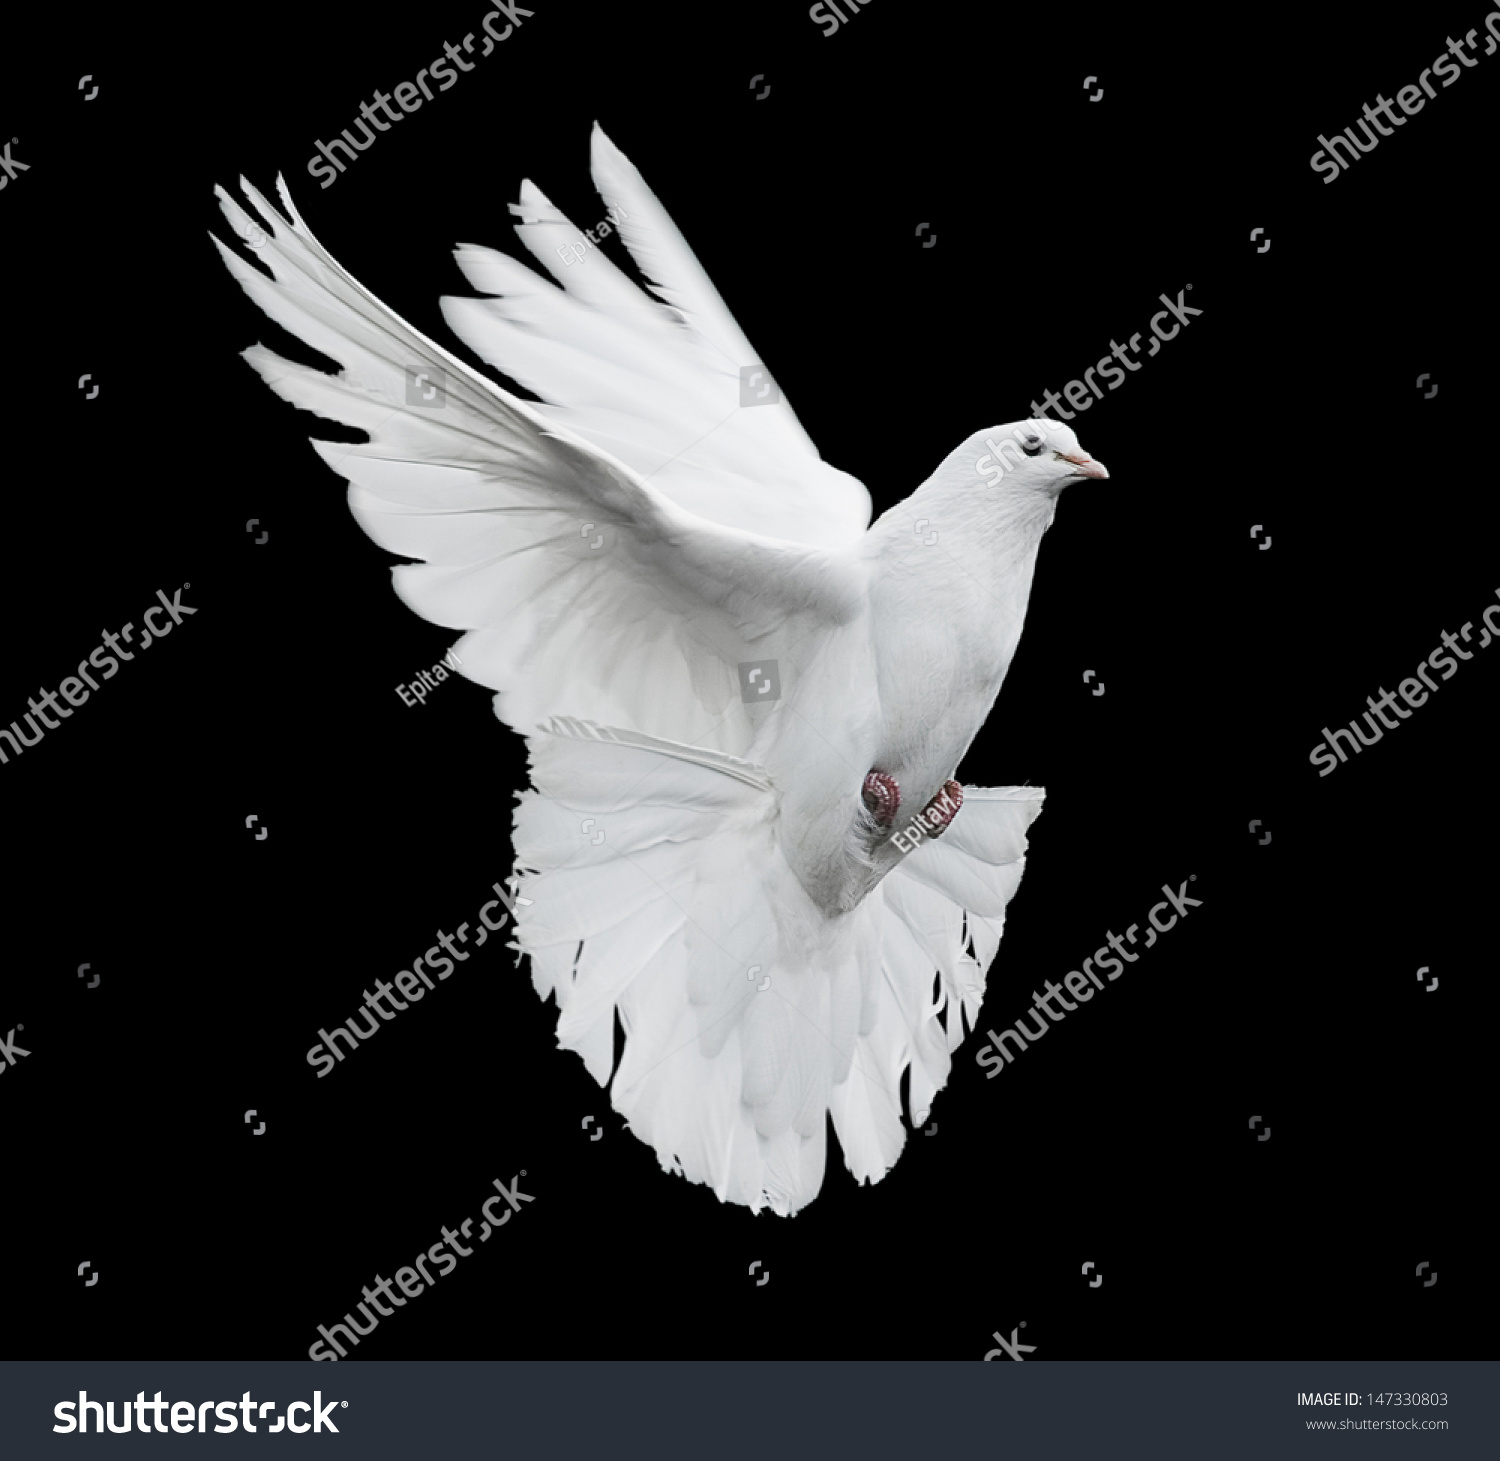 Flying White Dove On Black Background Stock Photo (Royalty Free ...